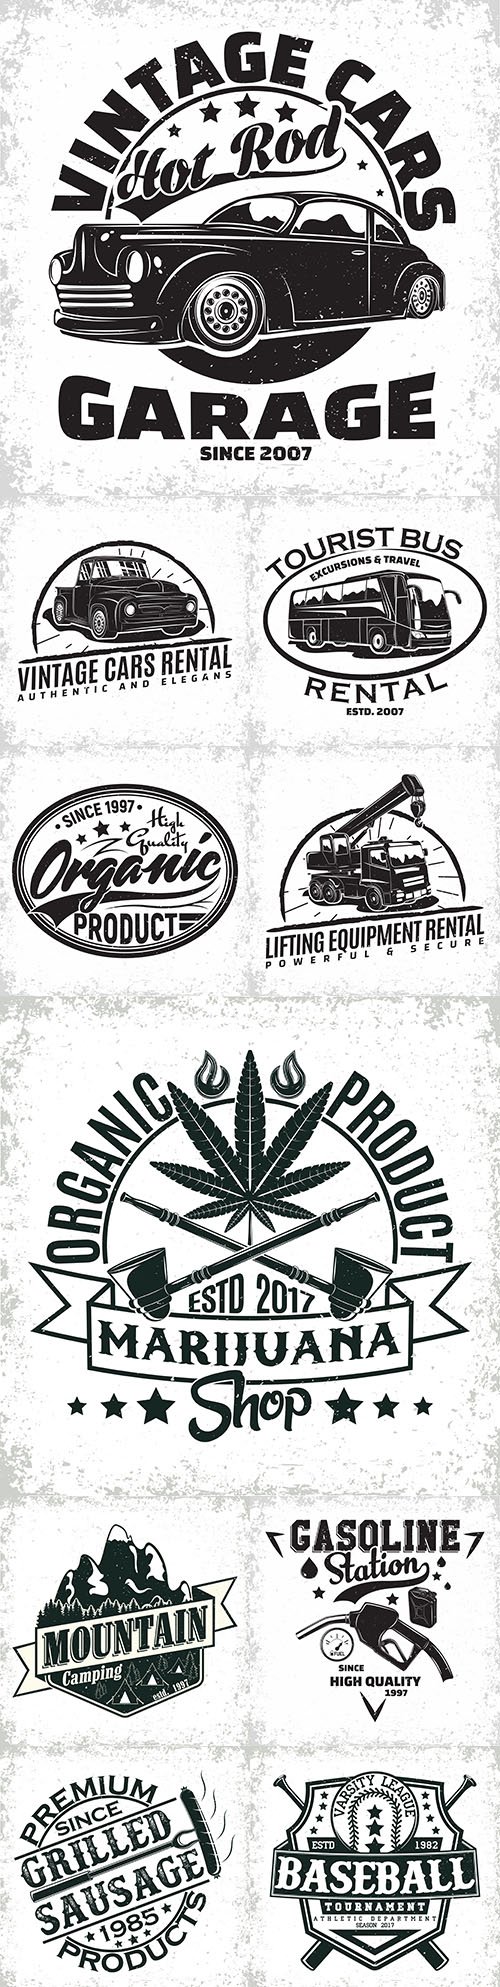 Vintage logo and grange printing emblem creative printing house